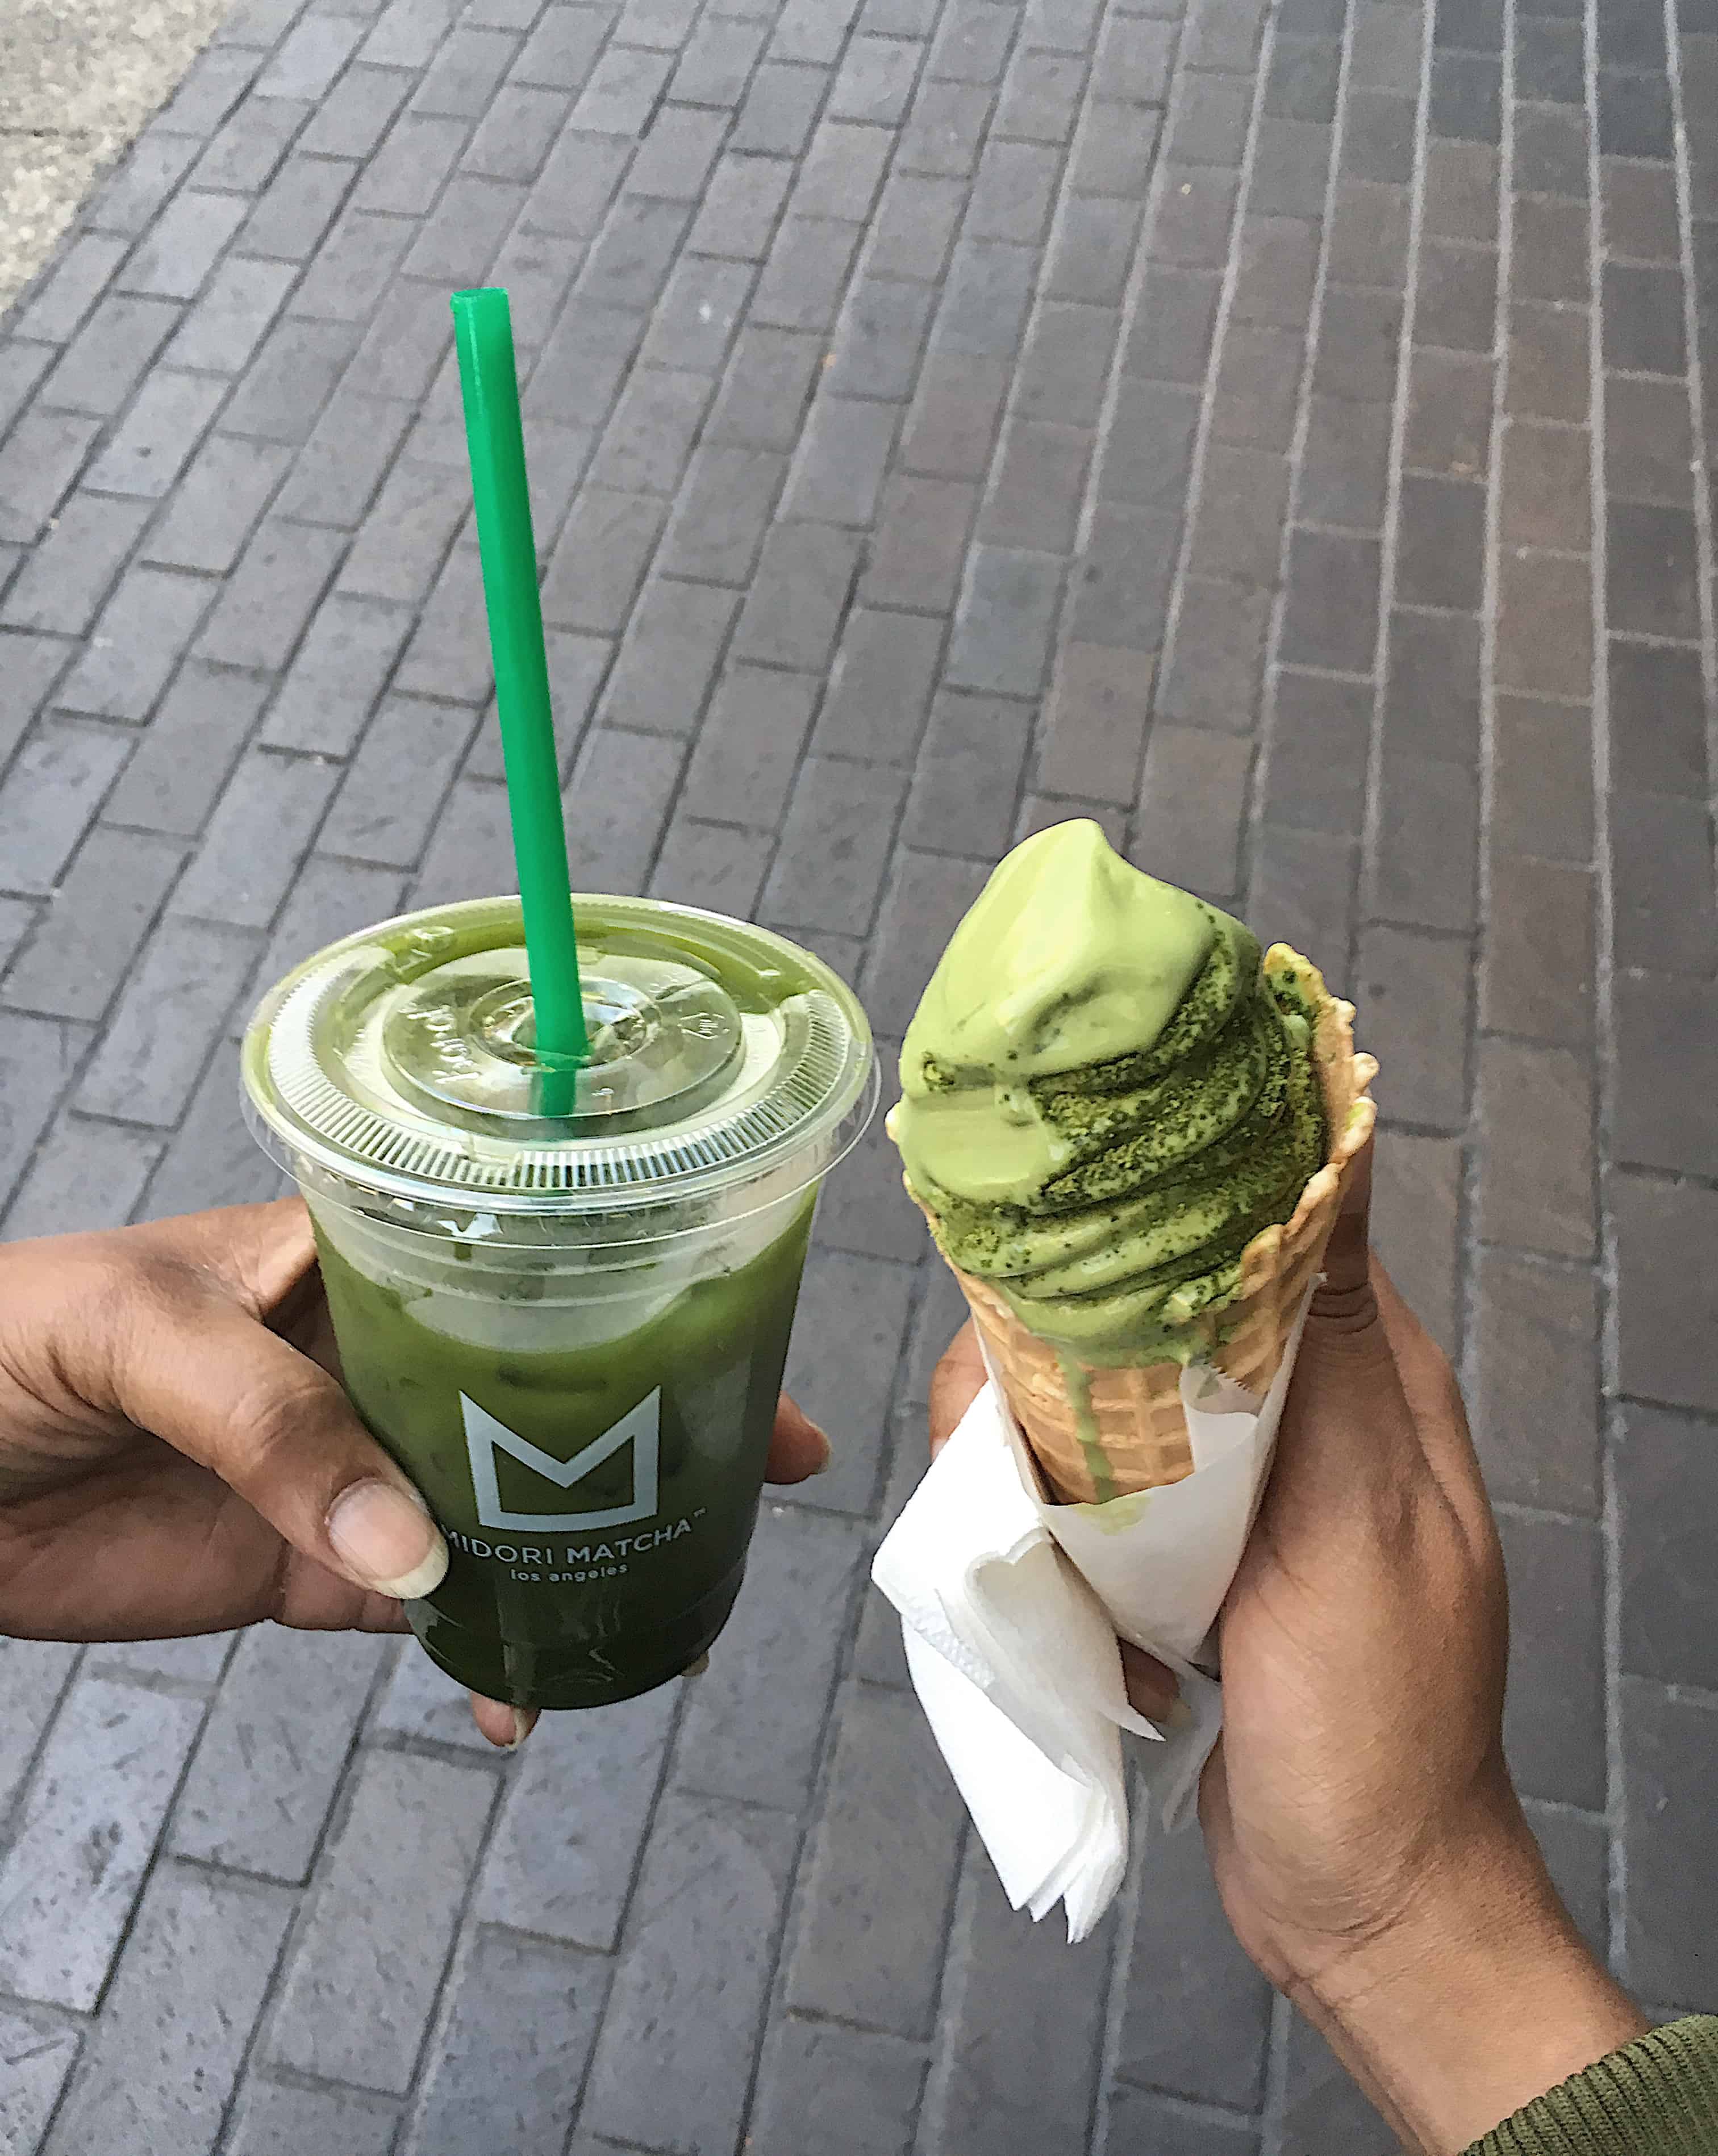 midori matcha drink and soft serve ice cream